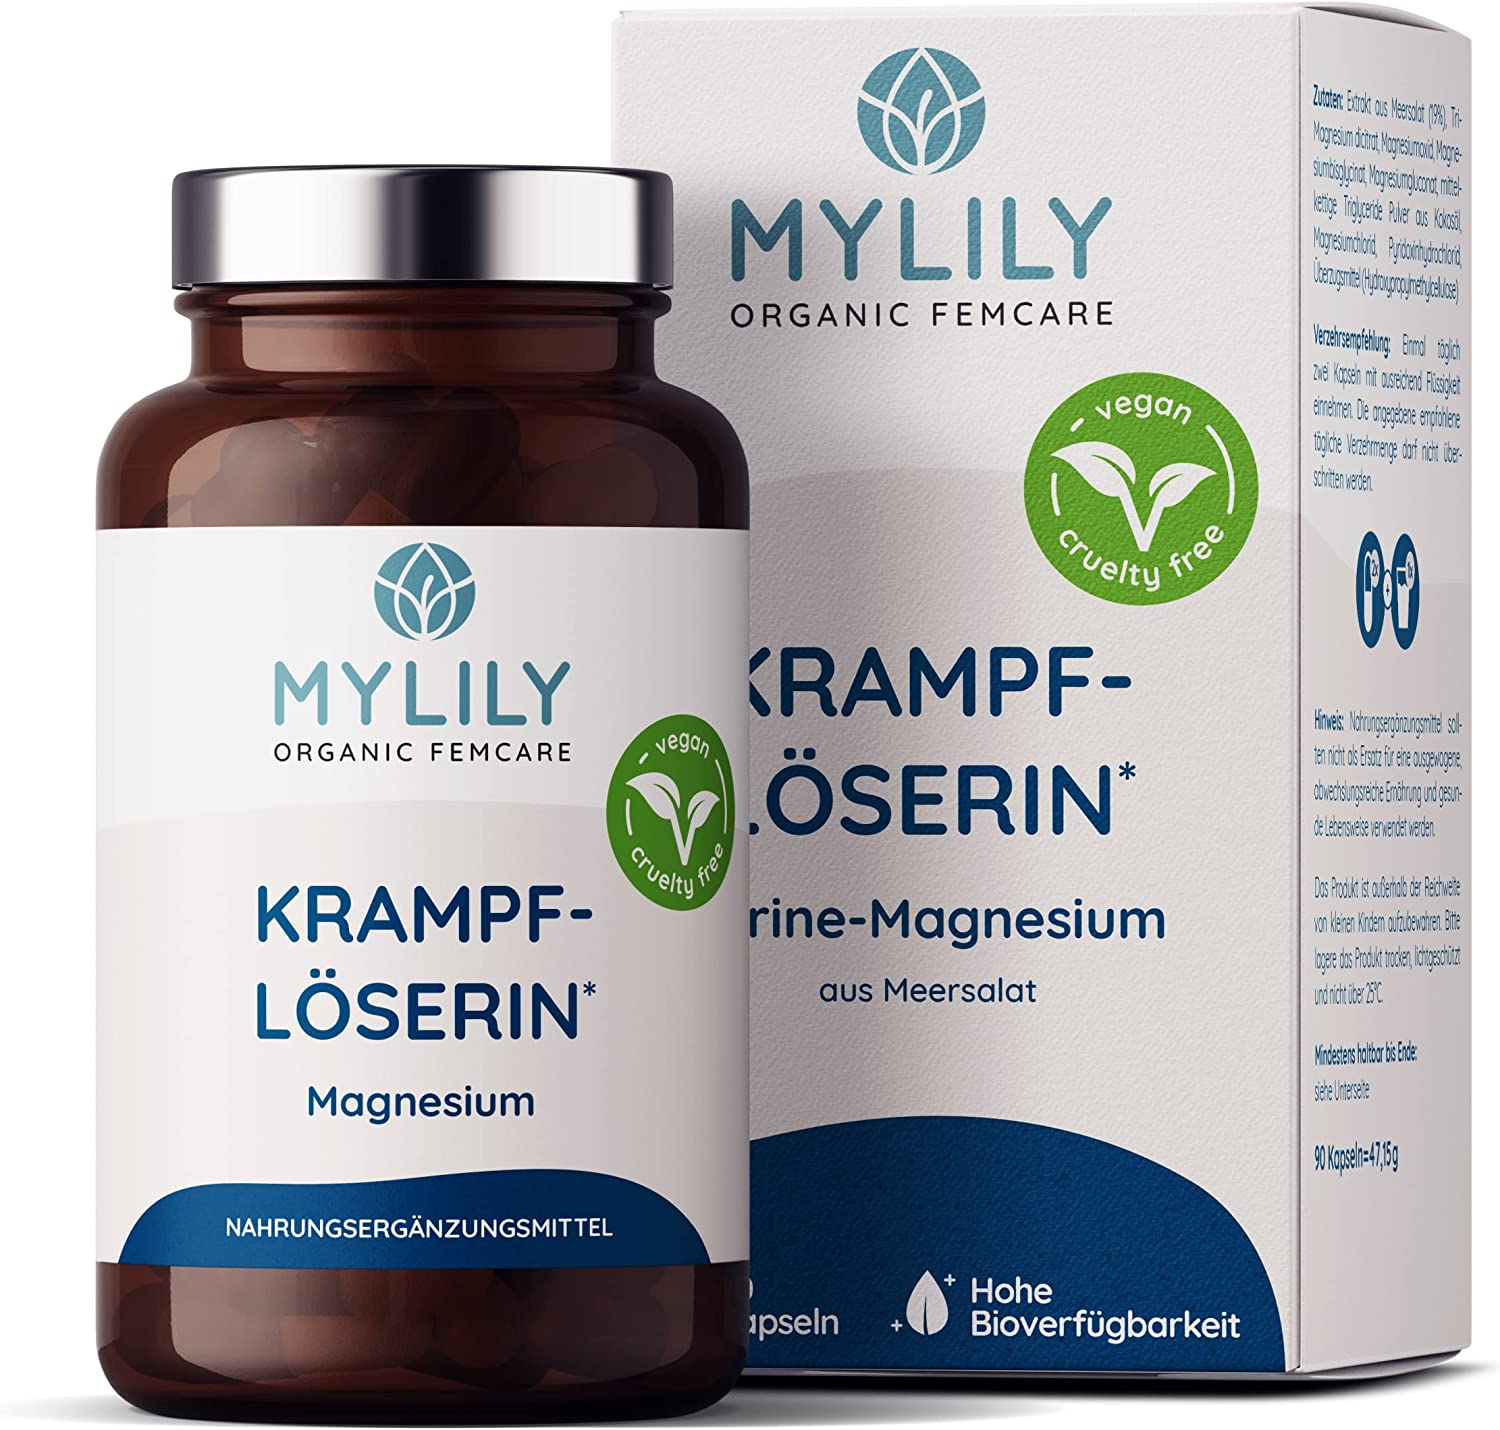 MYLILY Krampflöserin | 90 Kapseln | Magnesiumkomplex | Marine-Magnesium aus Meersalat | hohe Bioverfügbarkeit I deckt den Tagesbedarf | vegan